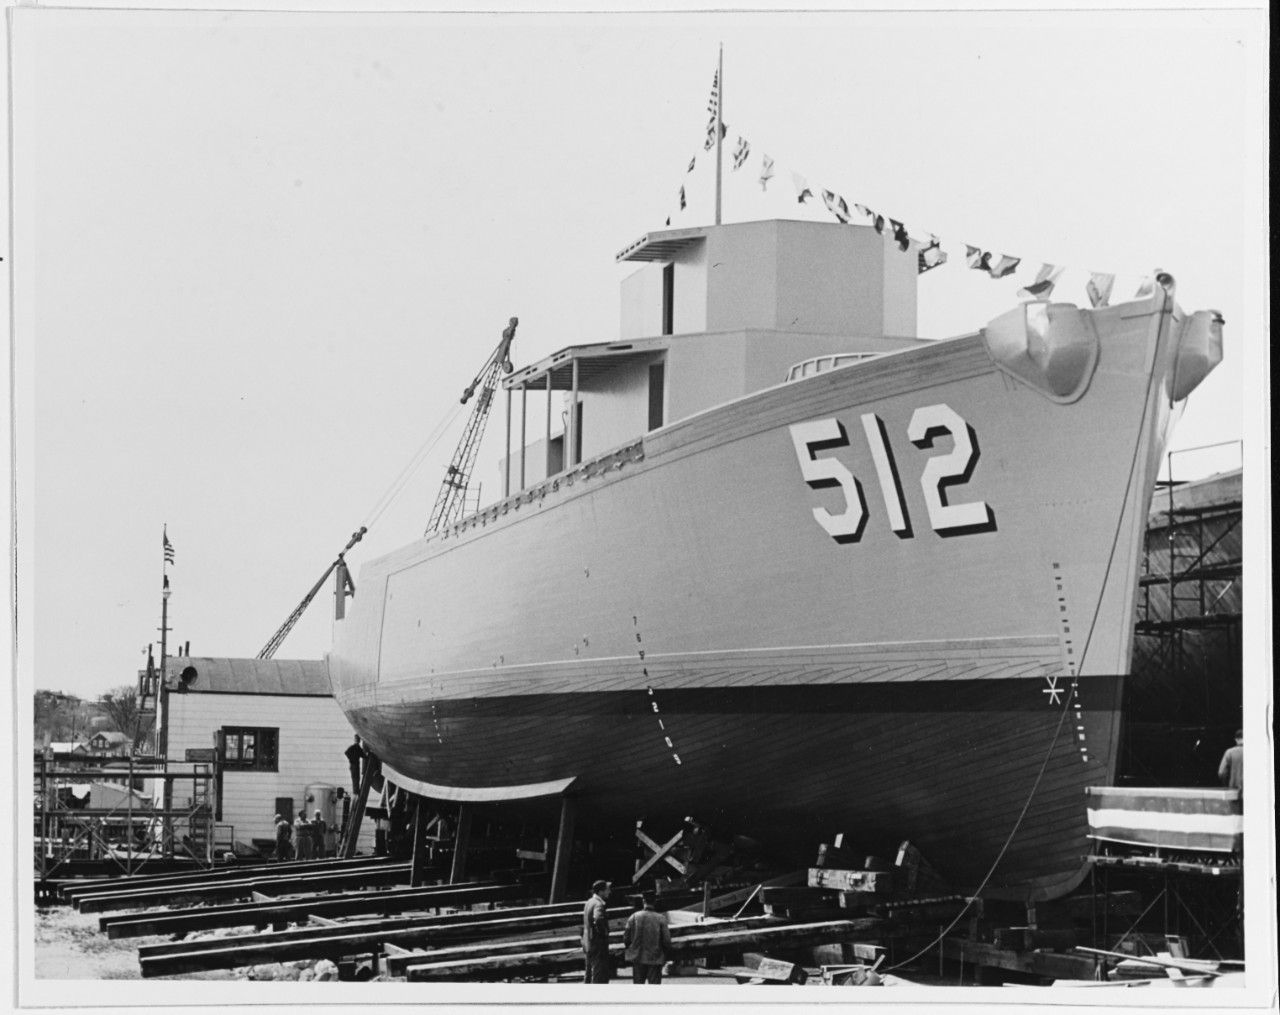 MSO-512